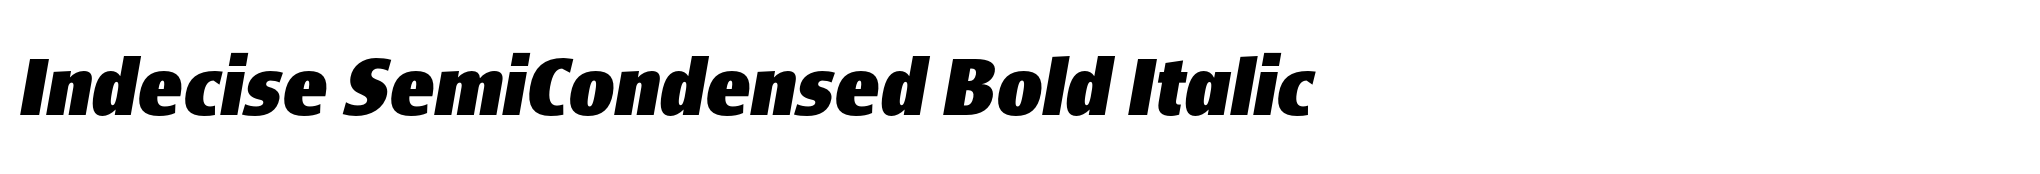 Indecise SemiCondensed Bold Italic image